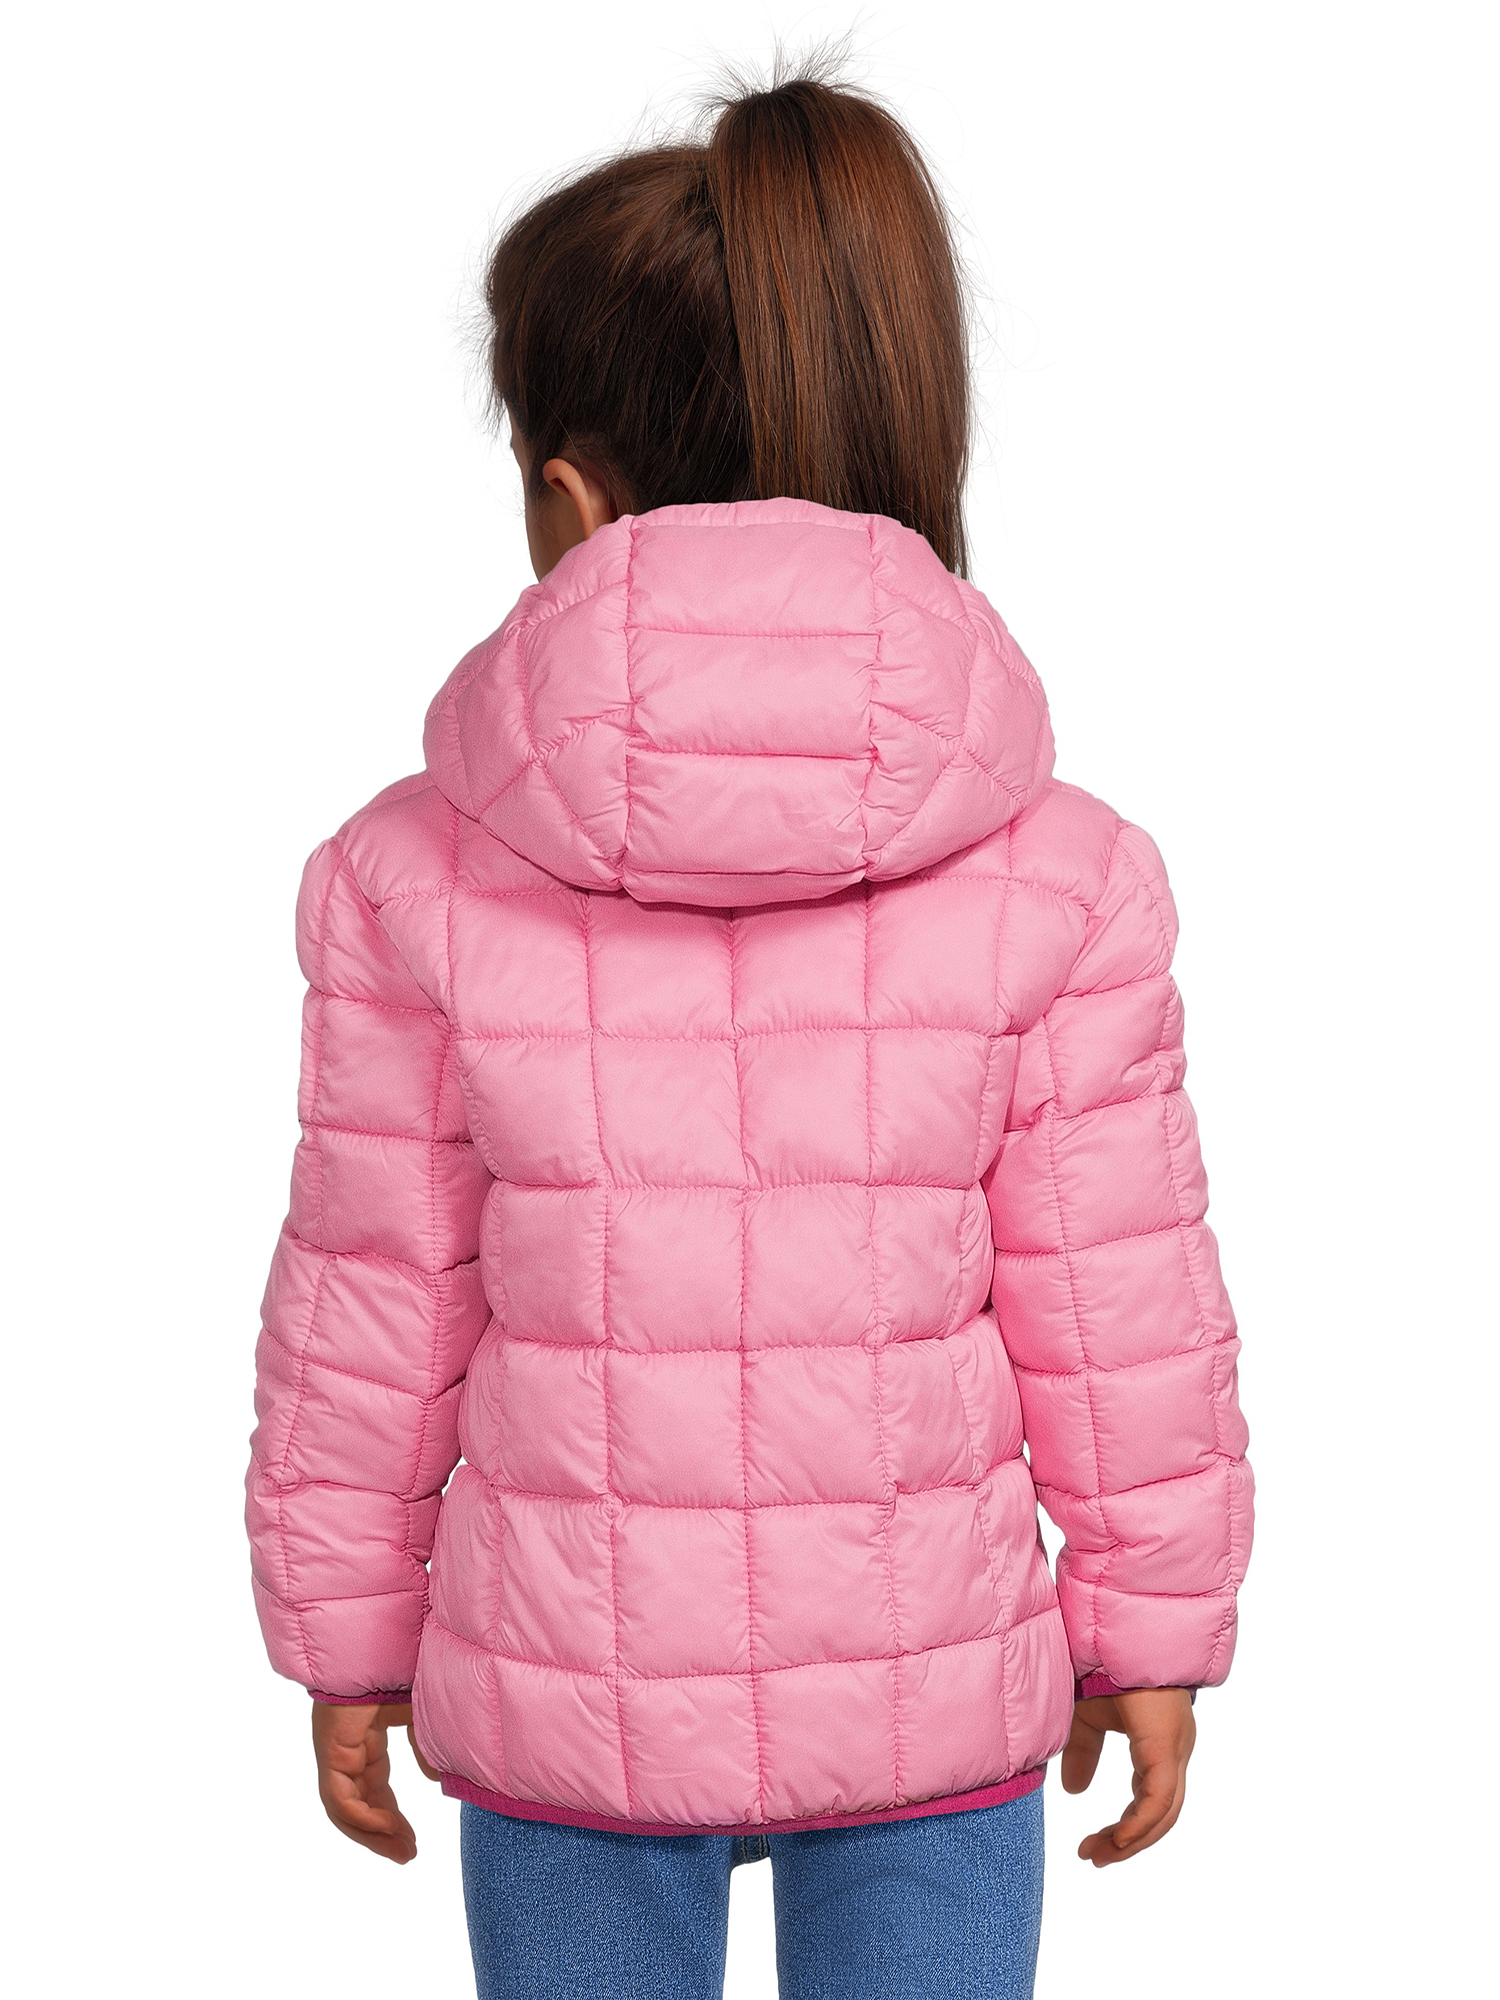 Reebok Baby and Toddler Puffer Jacket, Sizes 12M-5T - Walmart.com